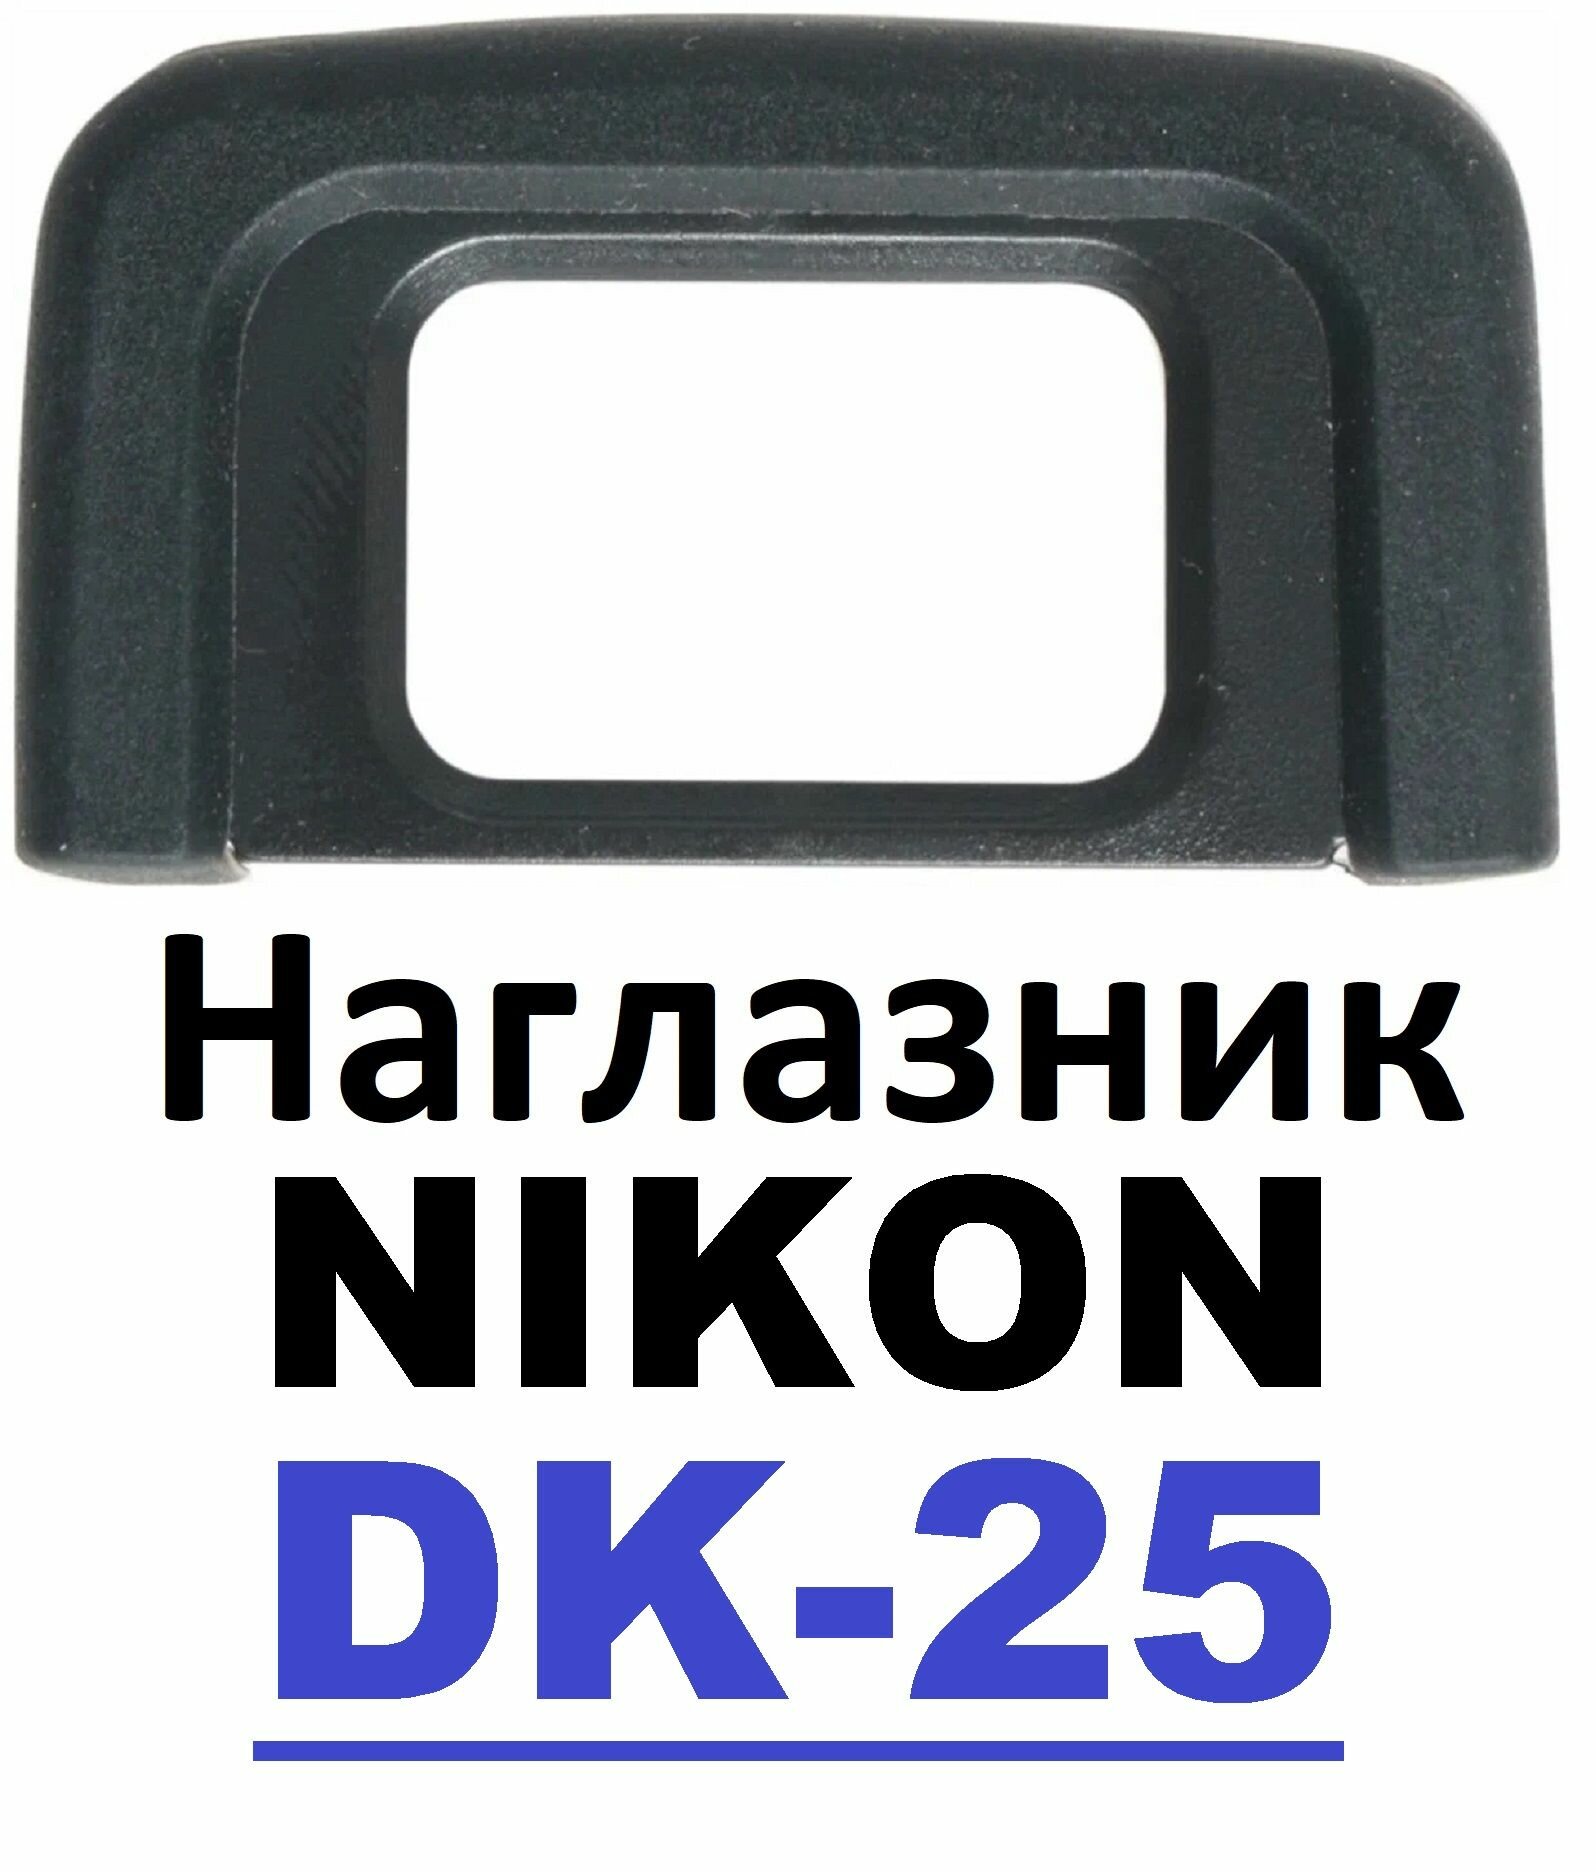 Наглазник на видоискатель Nikon DK-25. D5000, D5600, D3400, D5500